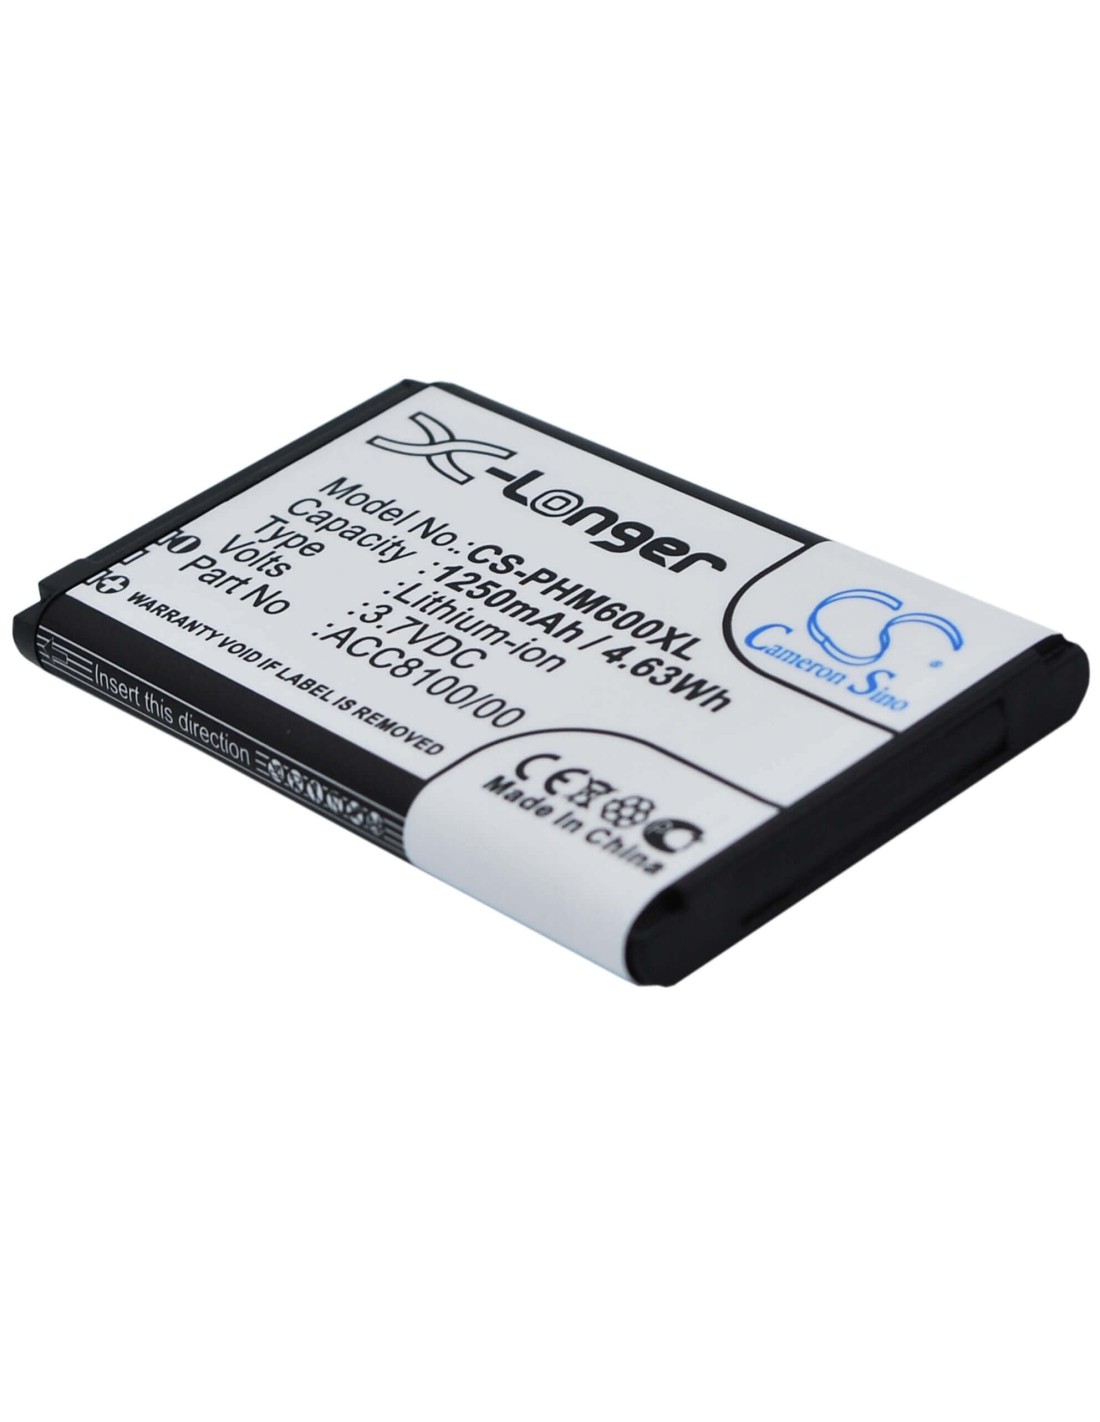 Battery for Philips Pocket Memo Dpm6000, Pocket Memo Dpm7000, Pocket Memo Dpm8000 3.7V, 1250mAh - 4.63Wh